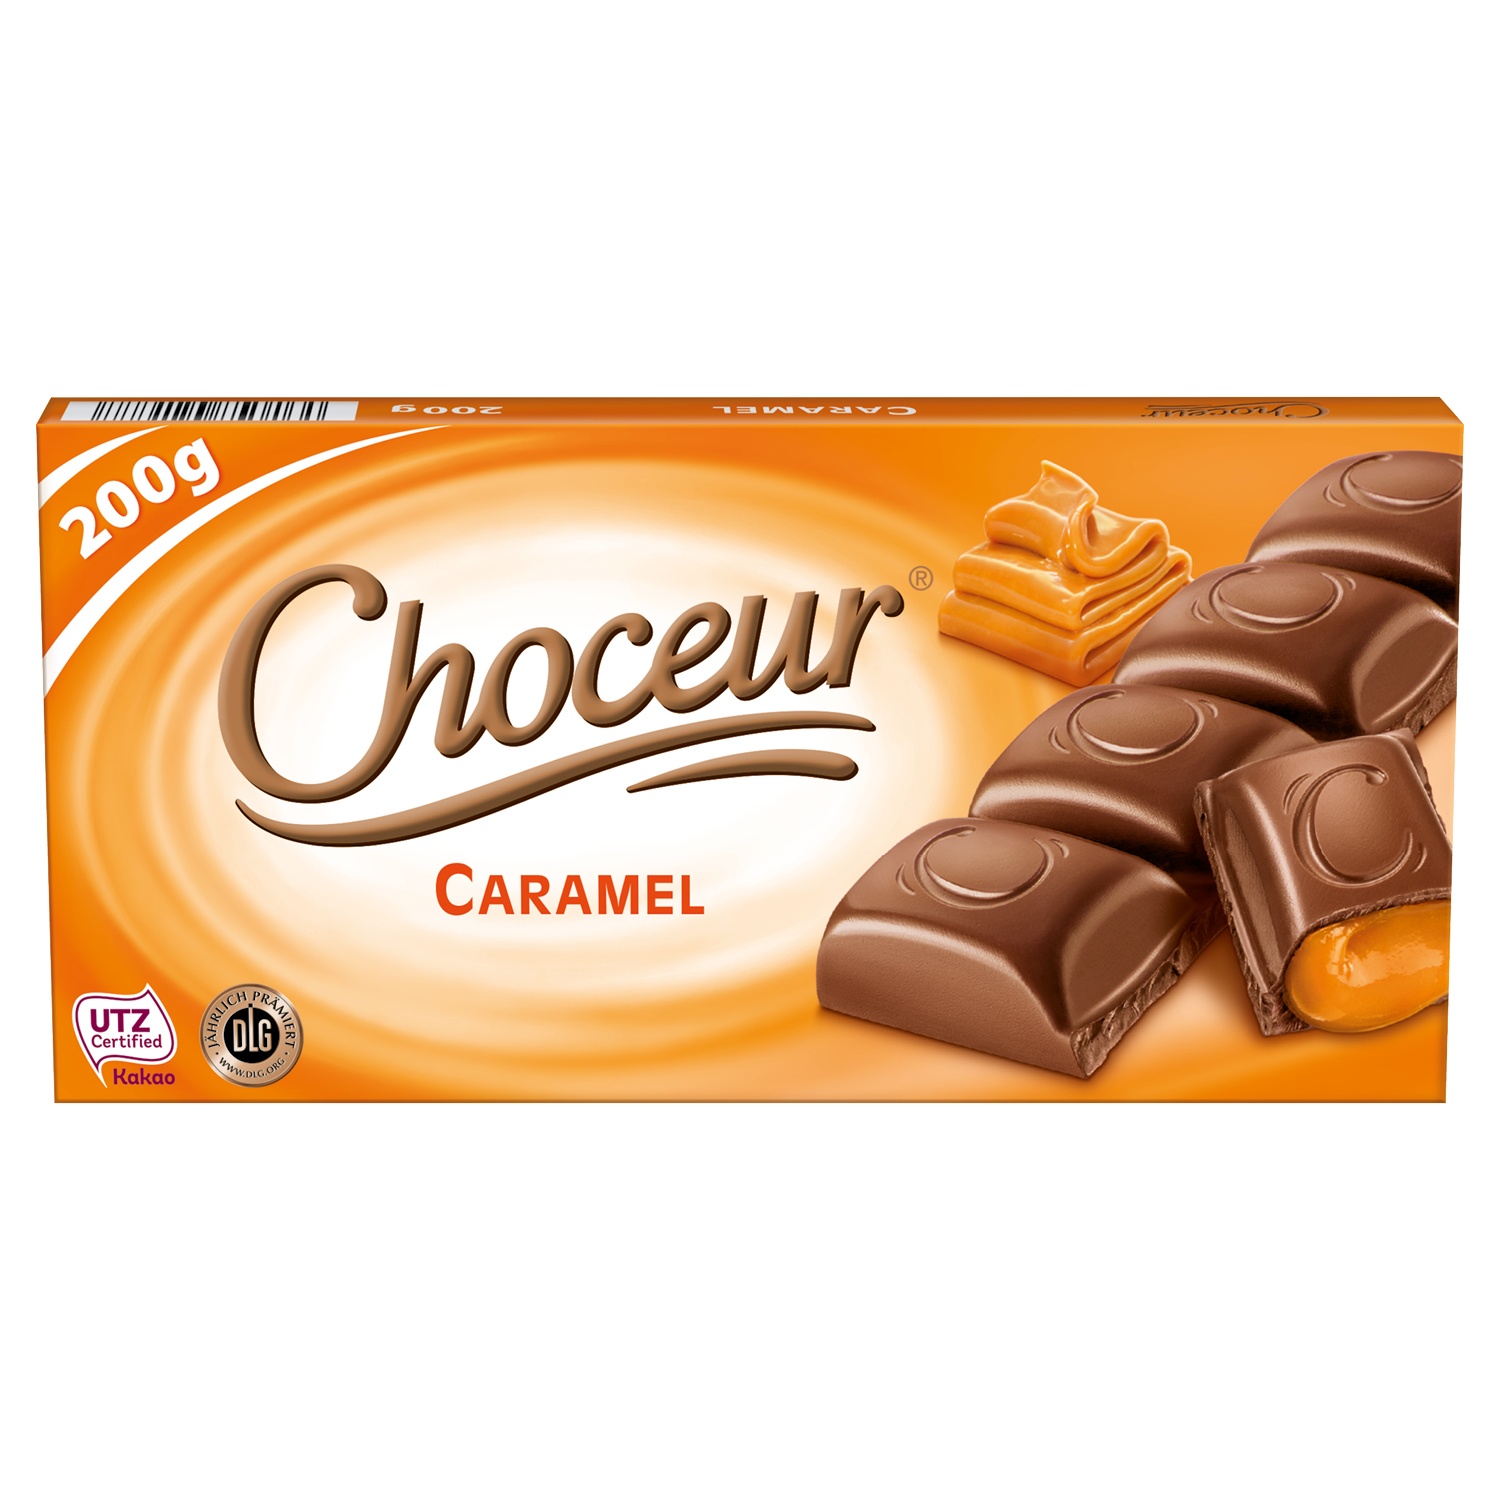 Choceur Gefüllte Schokolade 200g